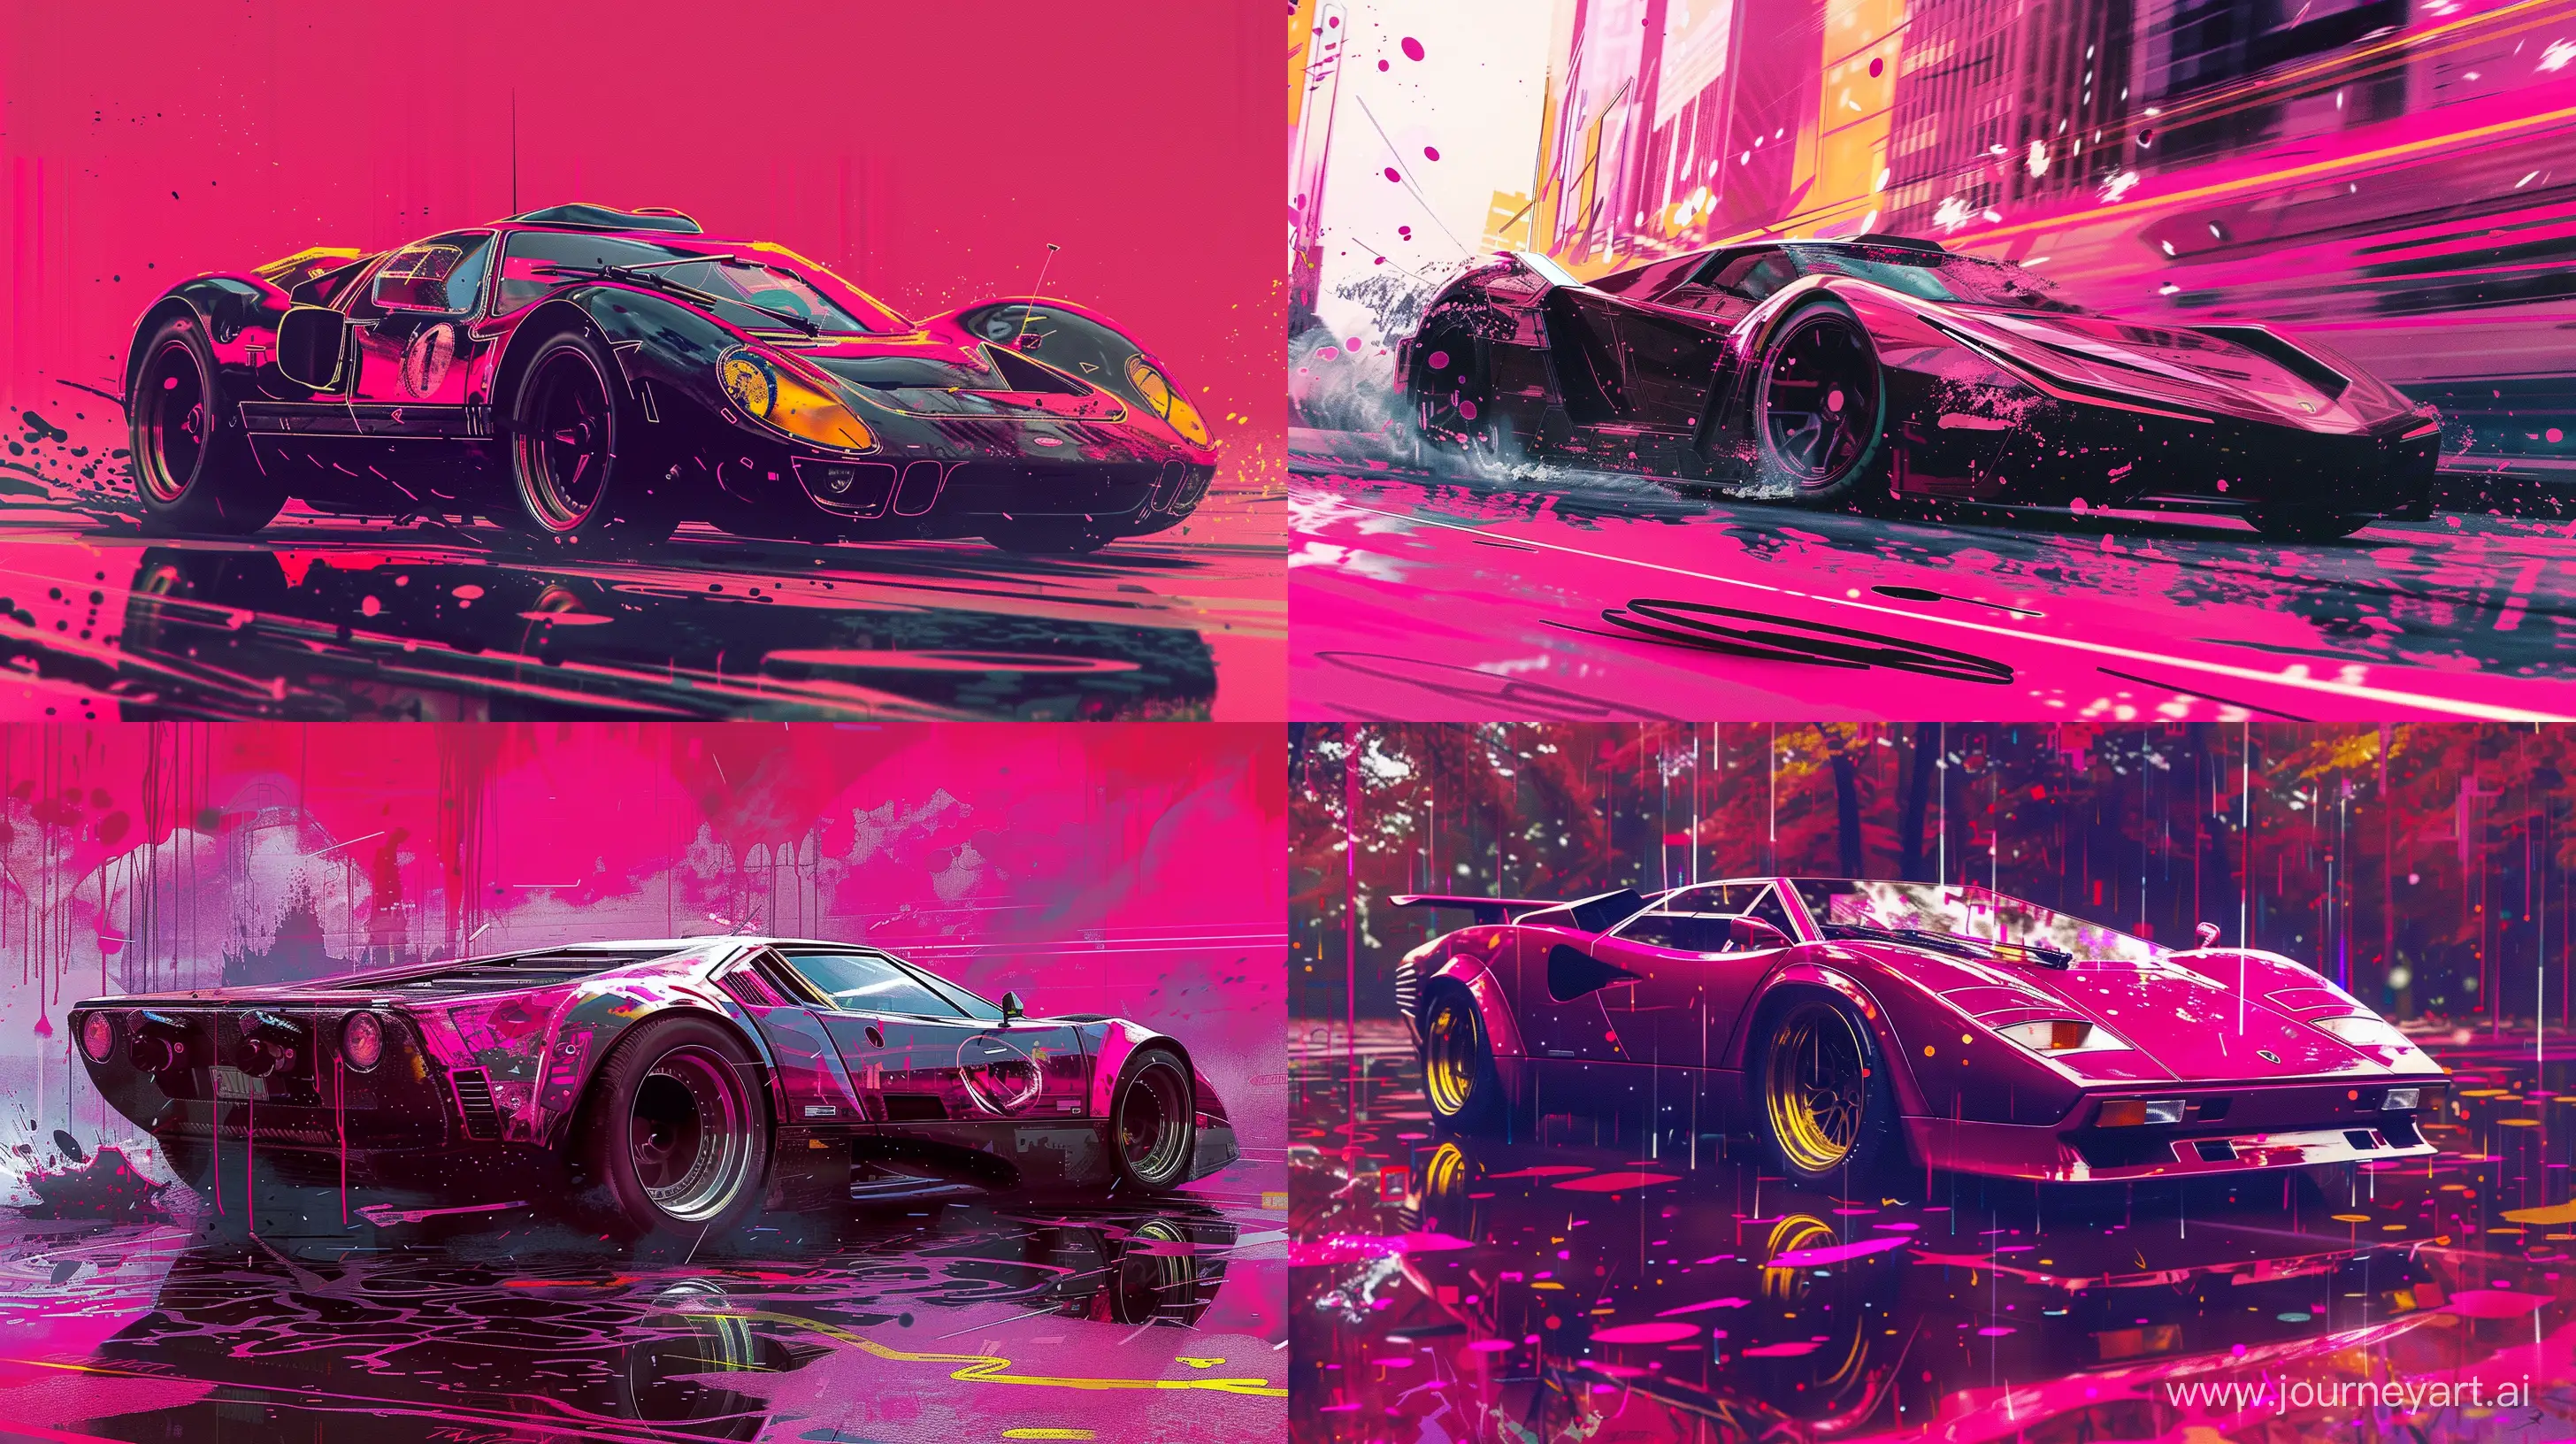 RetroFuturistic-Cyberpunk-Sportscar-Vibrant-NeoPop-Illustration